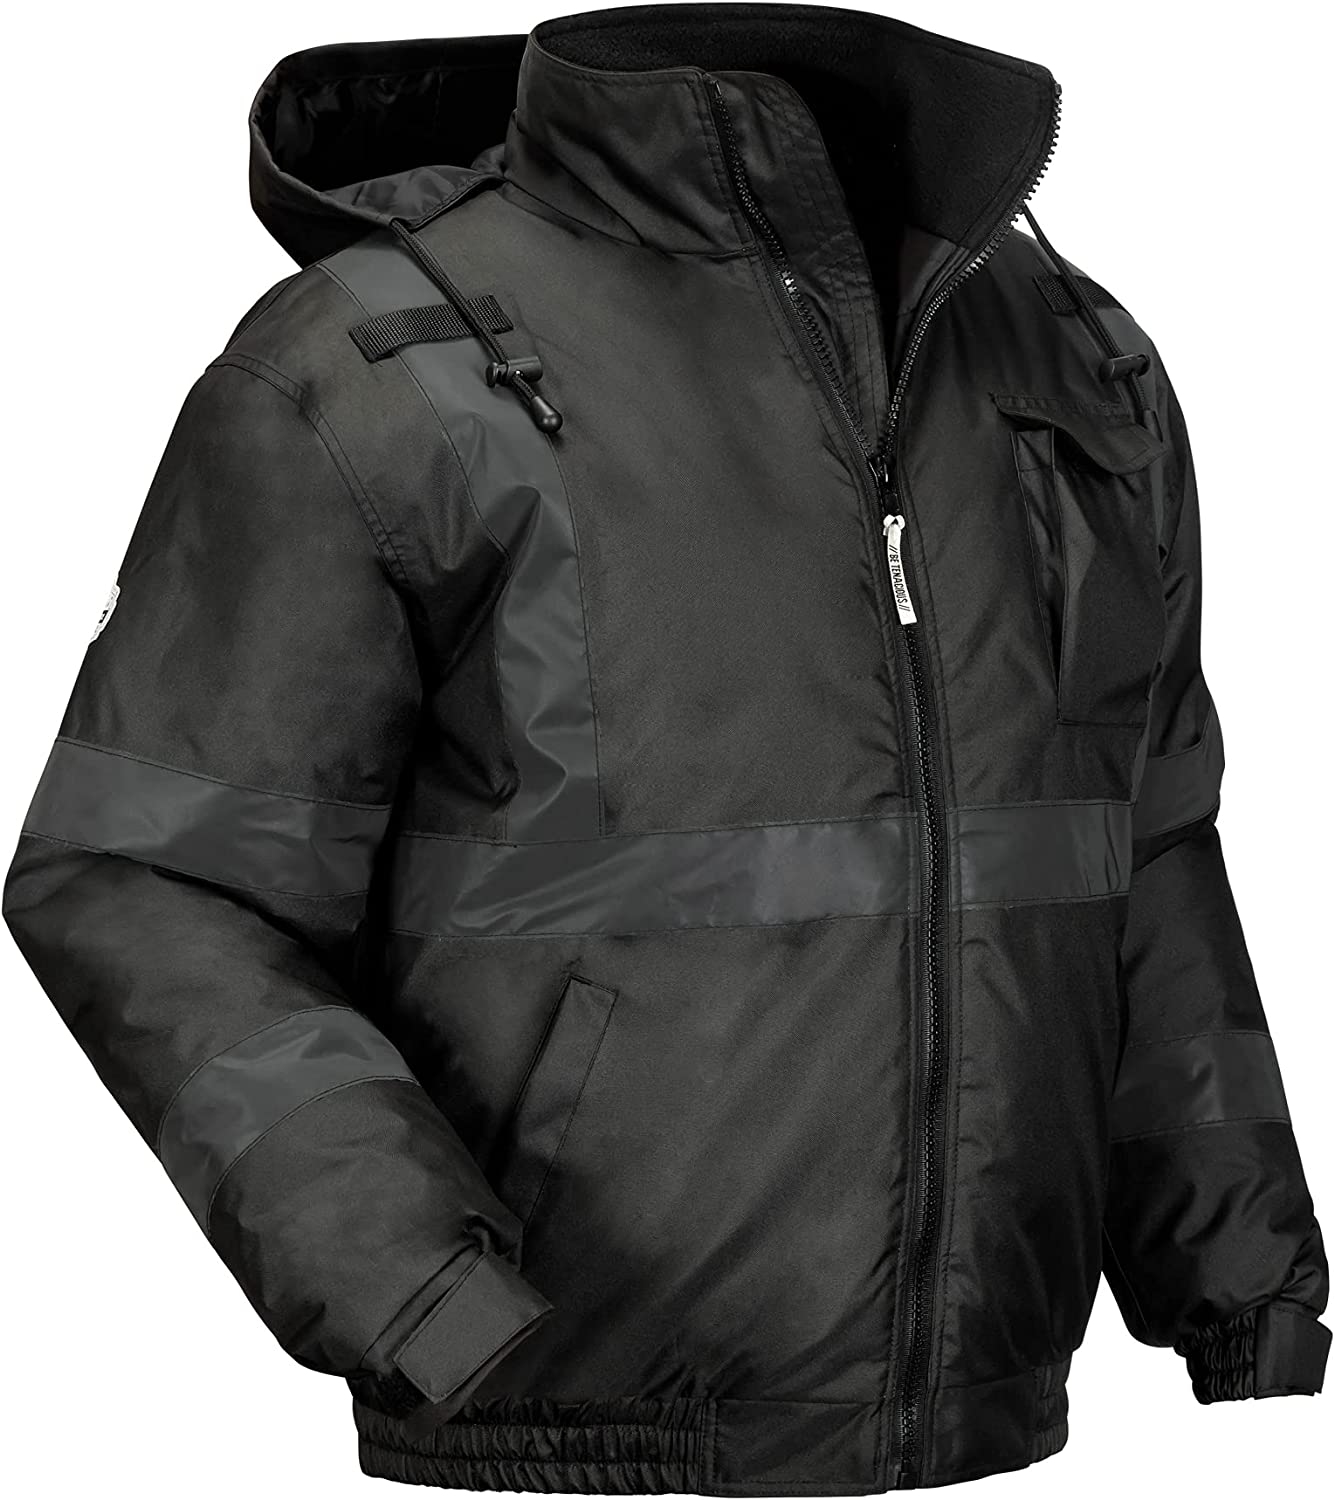 High Visibility Reflective Winter Bomber Jacket, Black Bottom, ANSI  Compliant, Ergodyne GloWear Ranger Rags